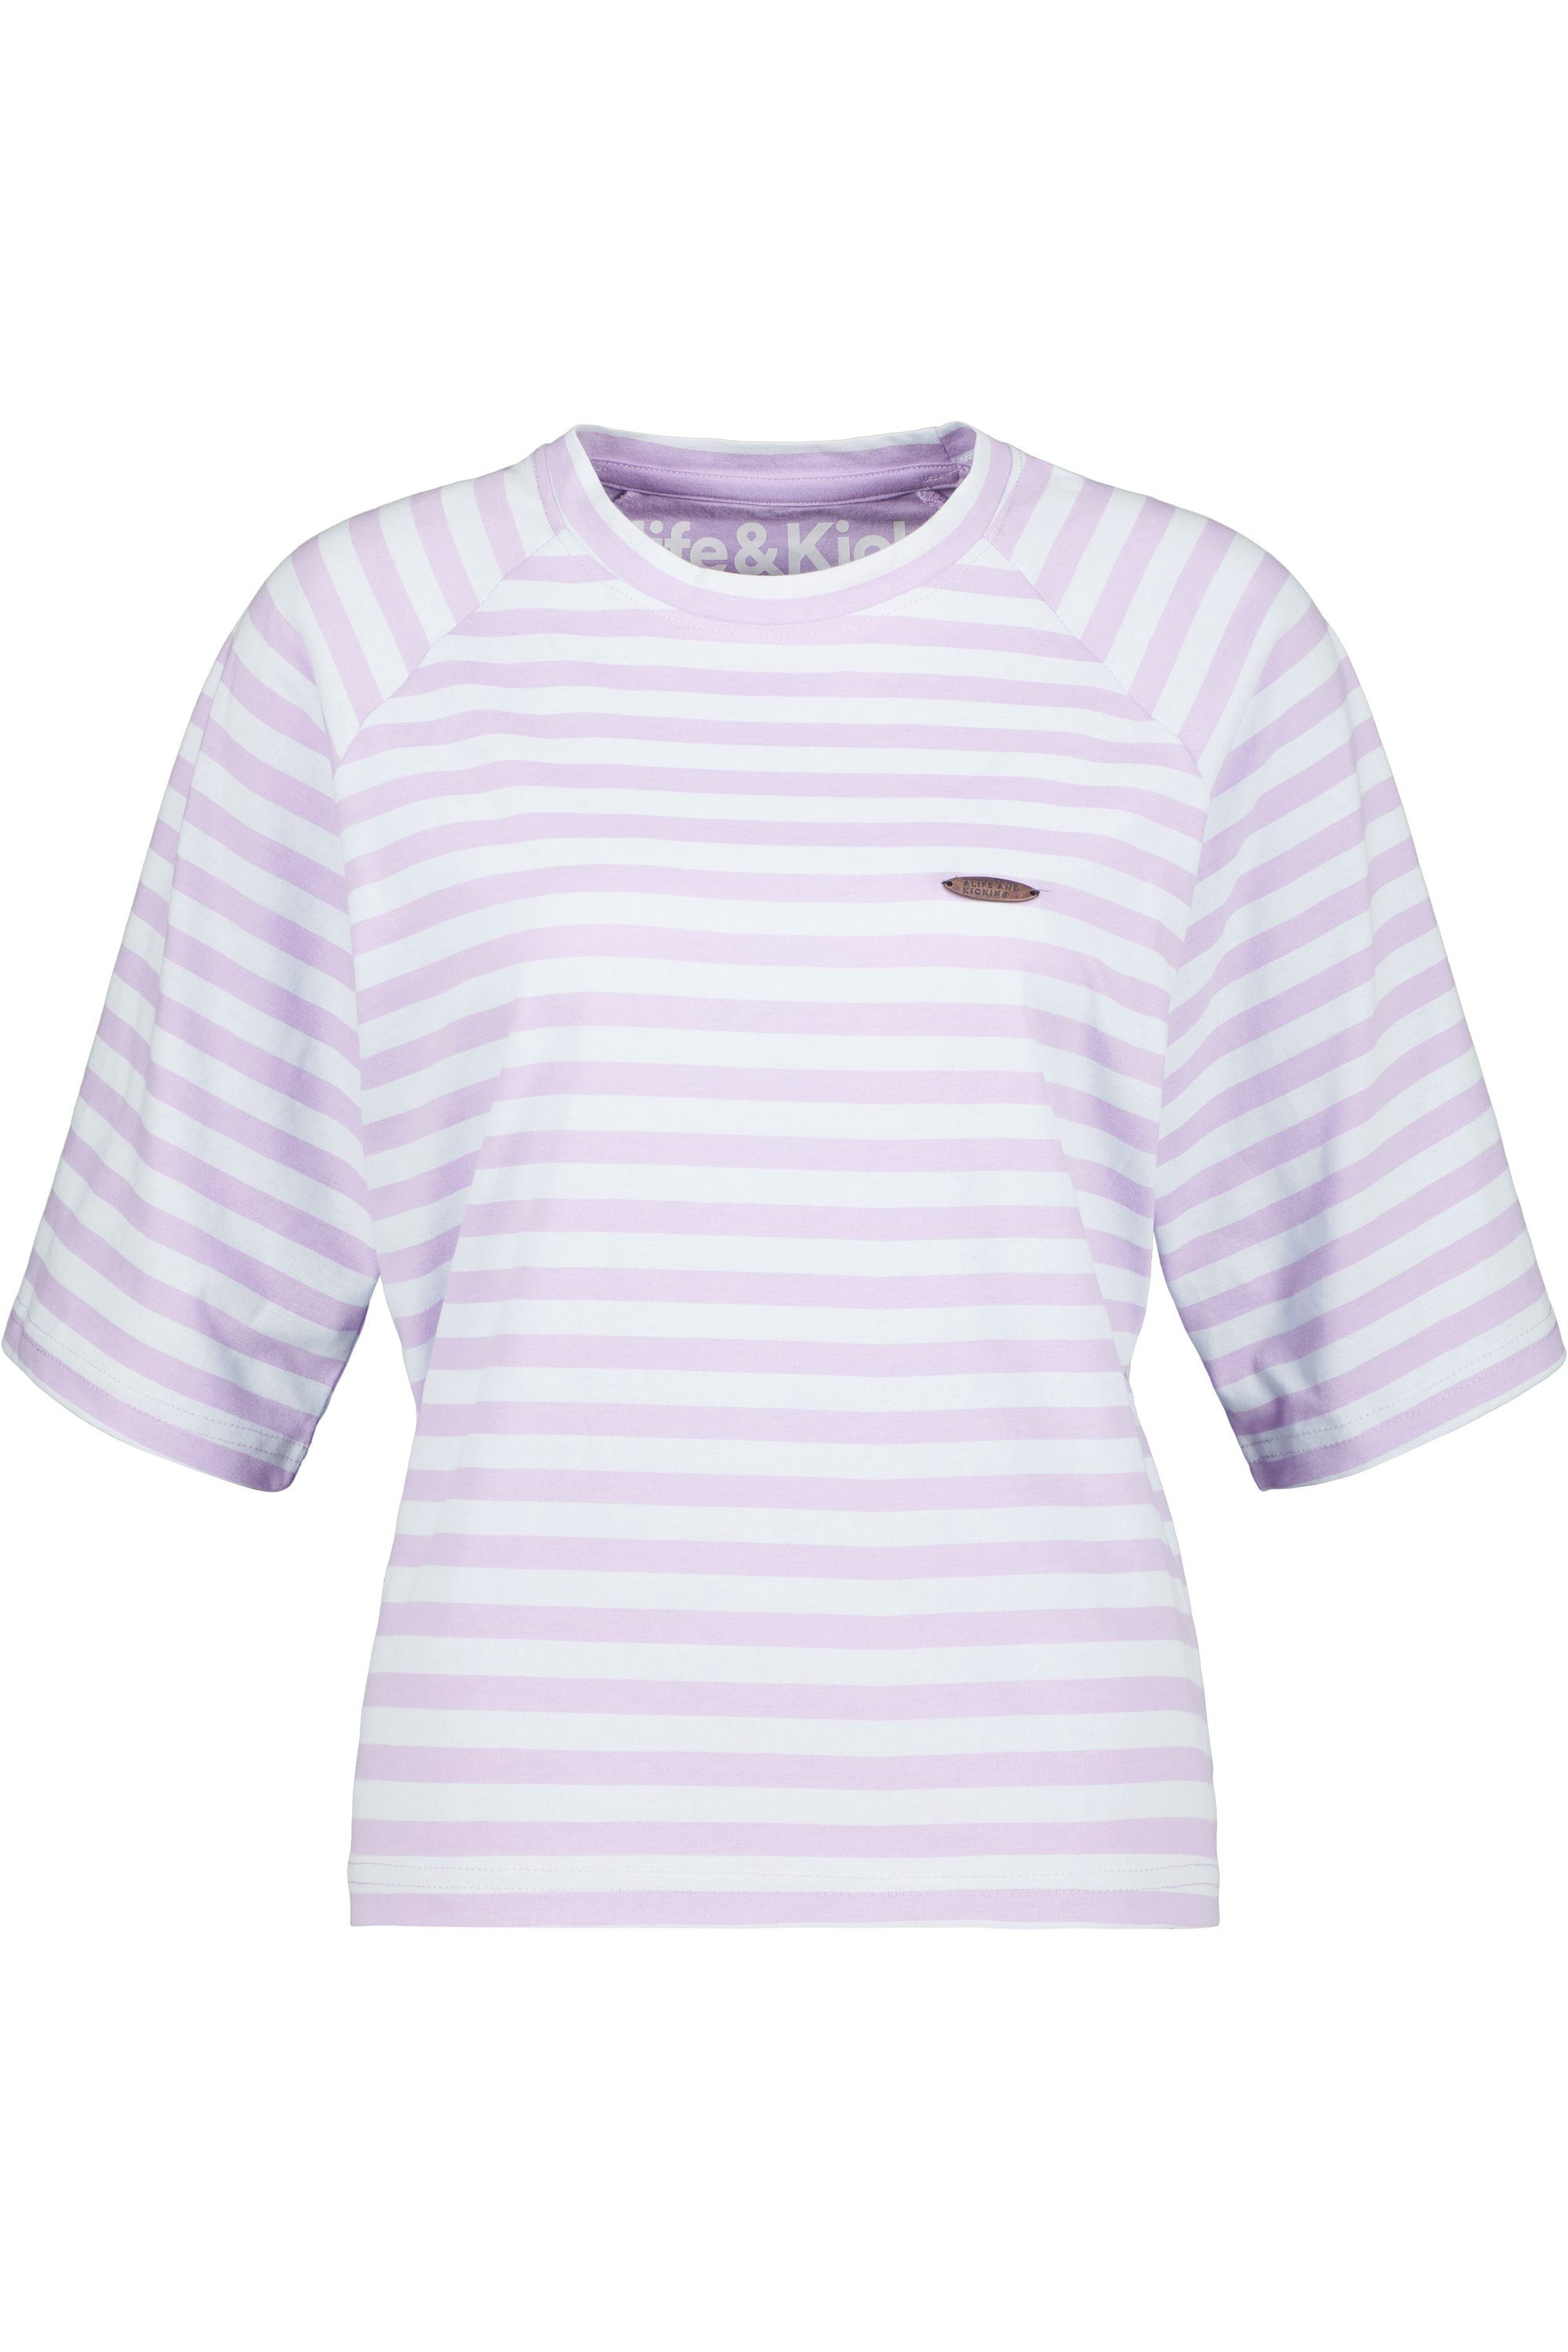 Alife & RubyAK lavender Kickin Shirt Shirt Damen Kurzarmshirt, Rundhalsshirt Z digital